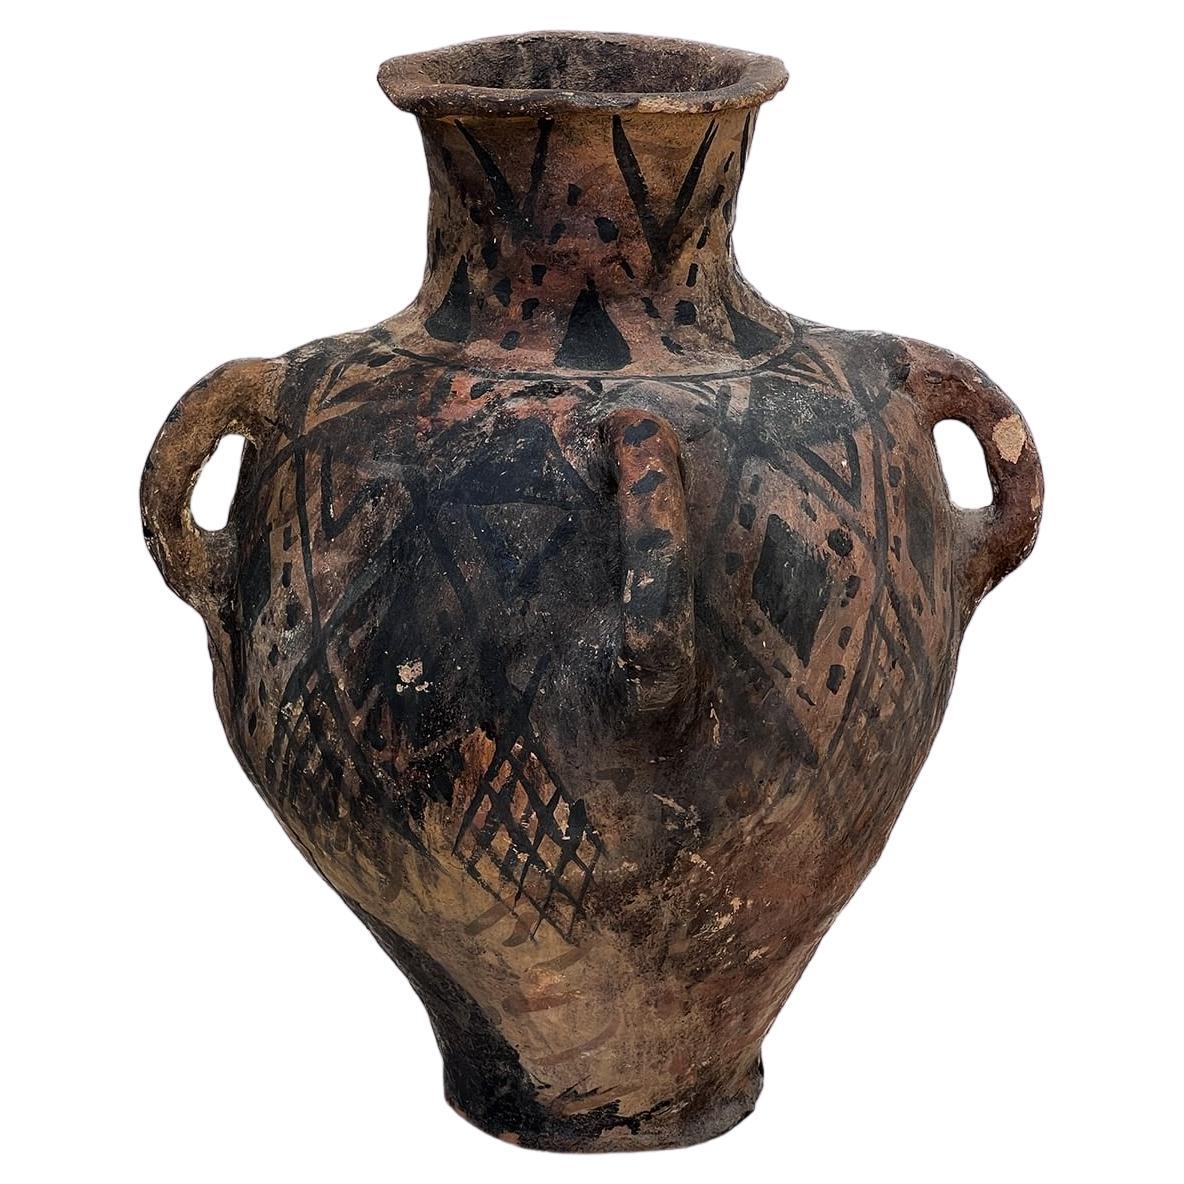 20" Chinese Neolithic Pottery Vase